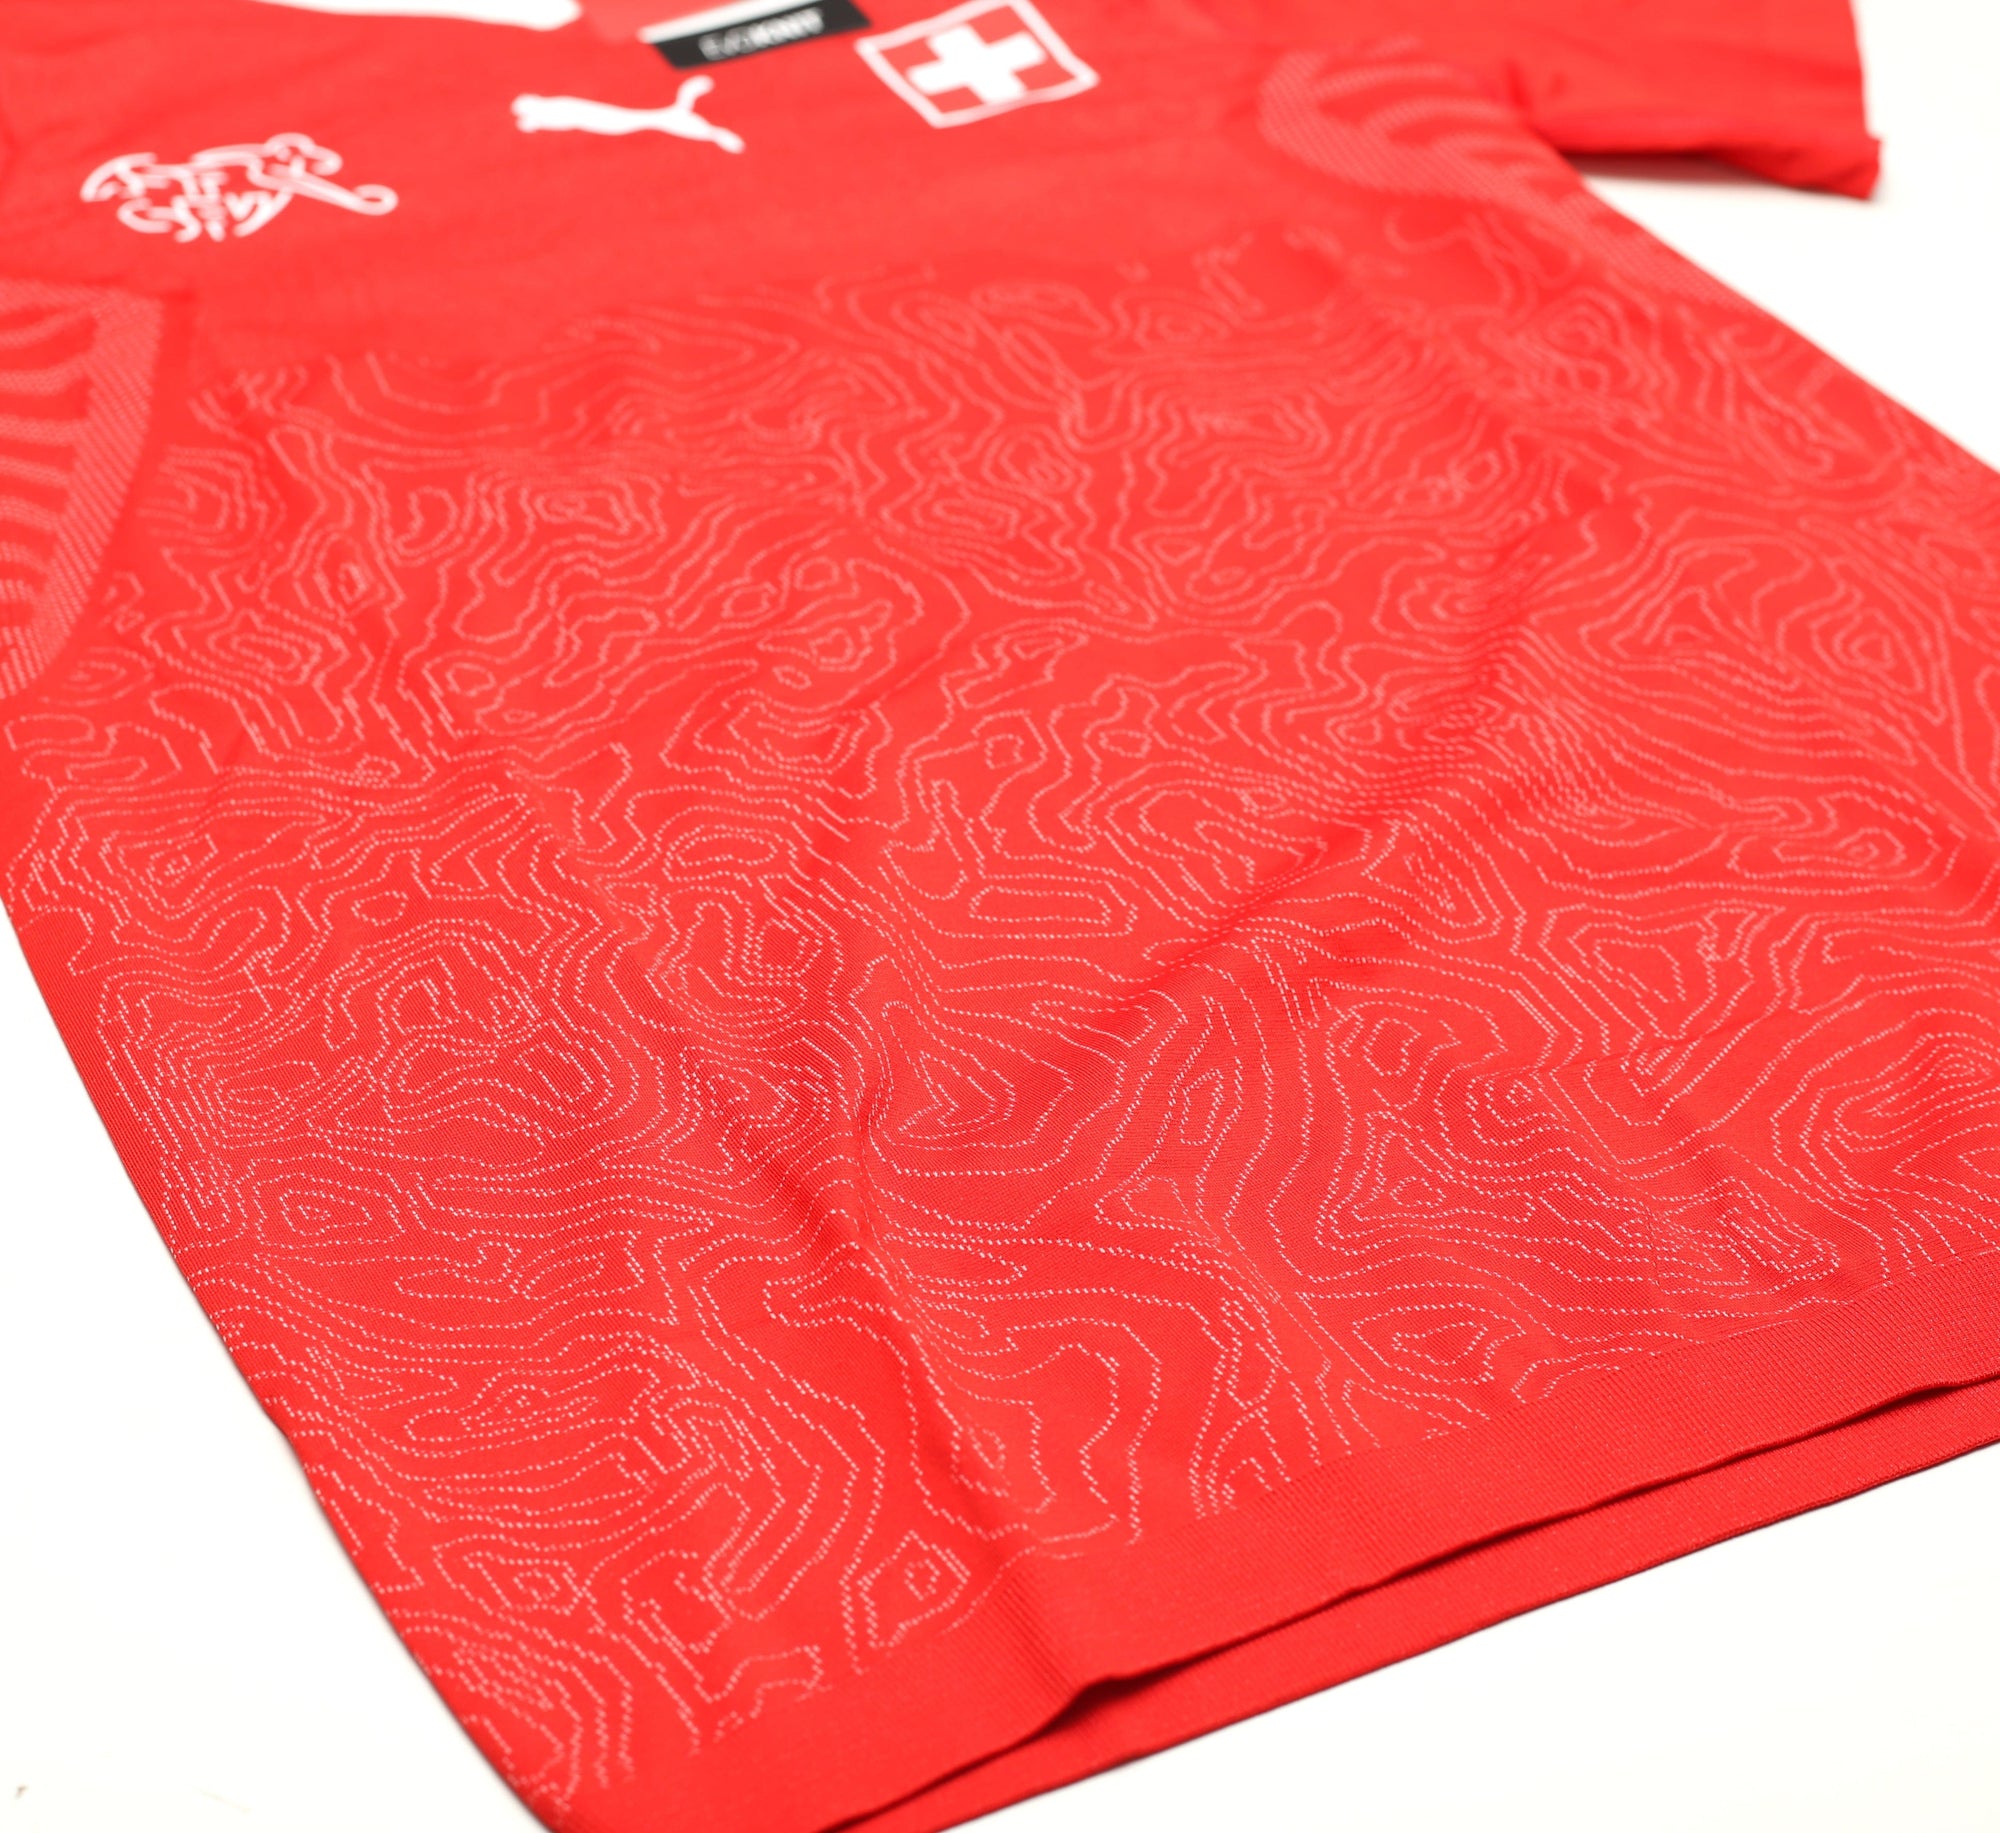 2018/19 SWITZERLAND Vintage PUMA EcoKnit Player Issue Home Football Shirt (XL)